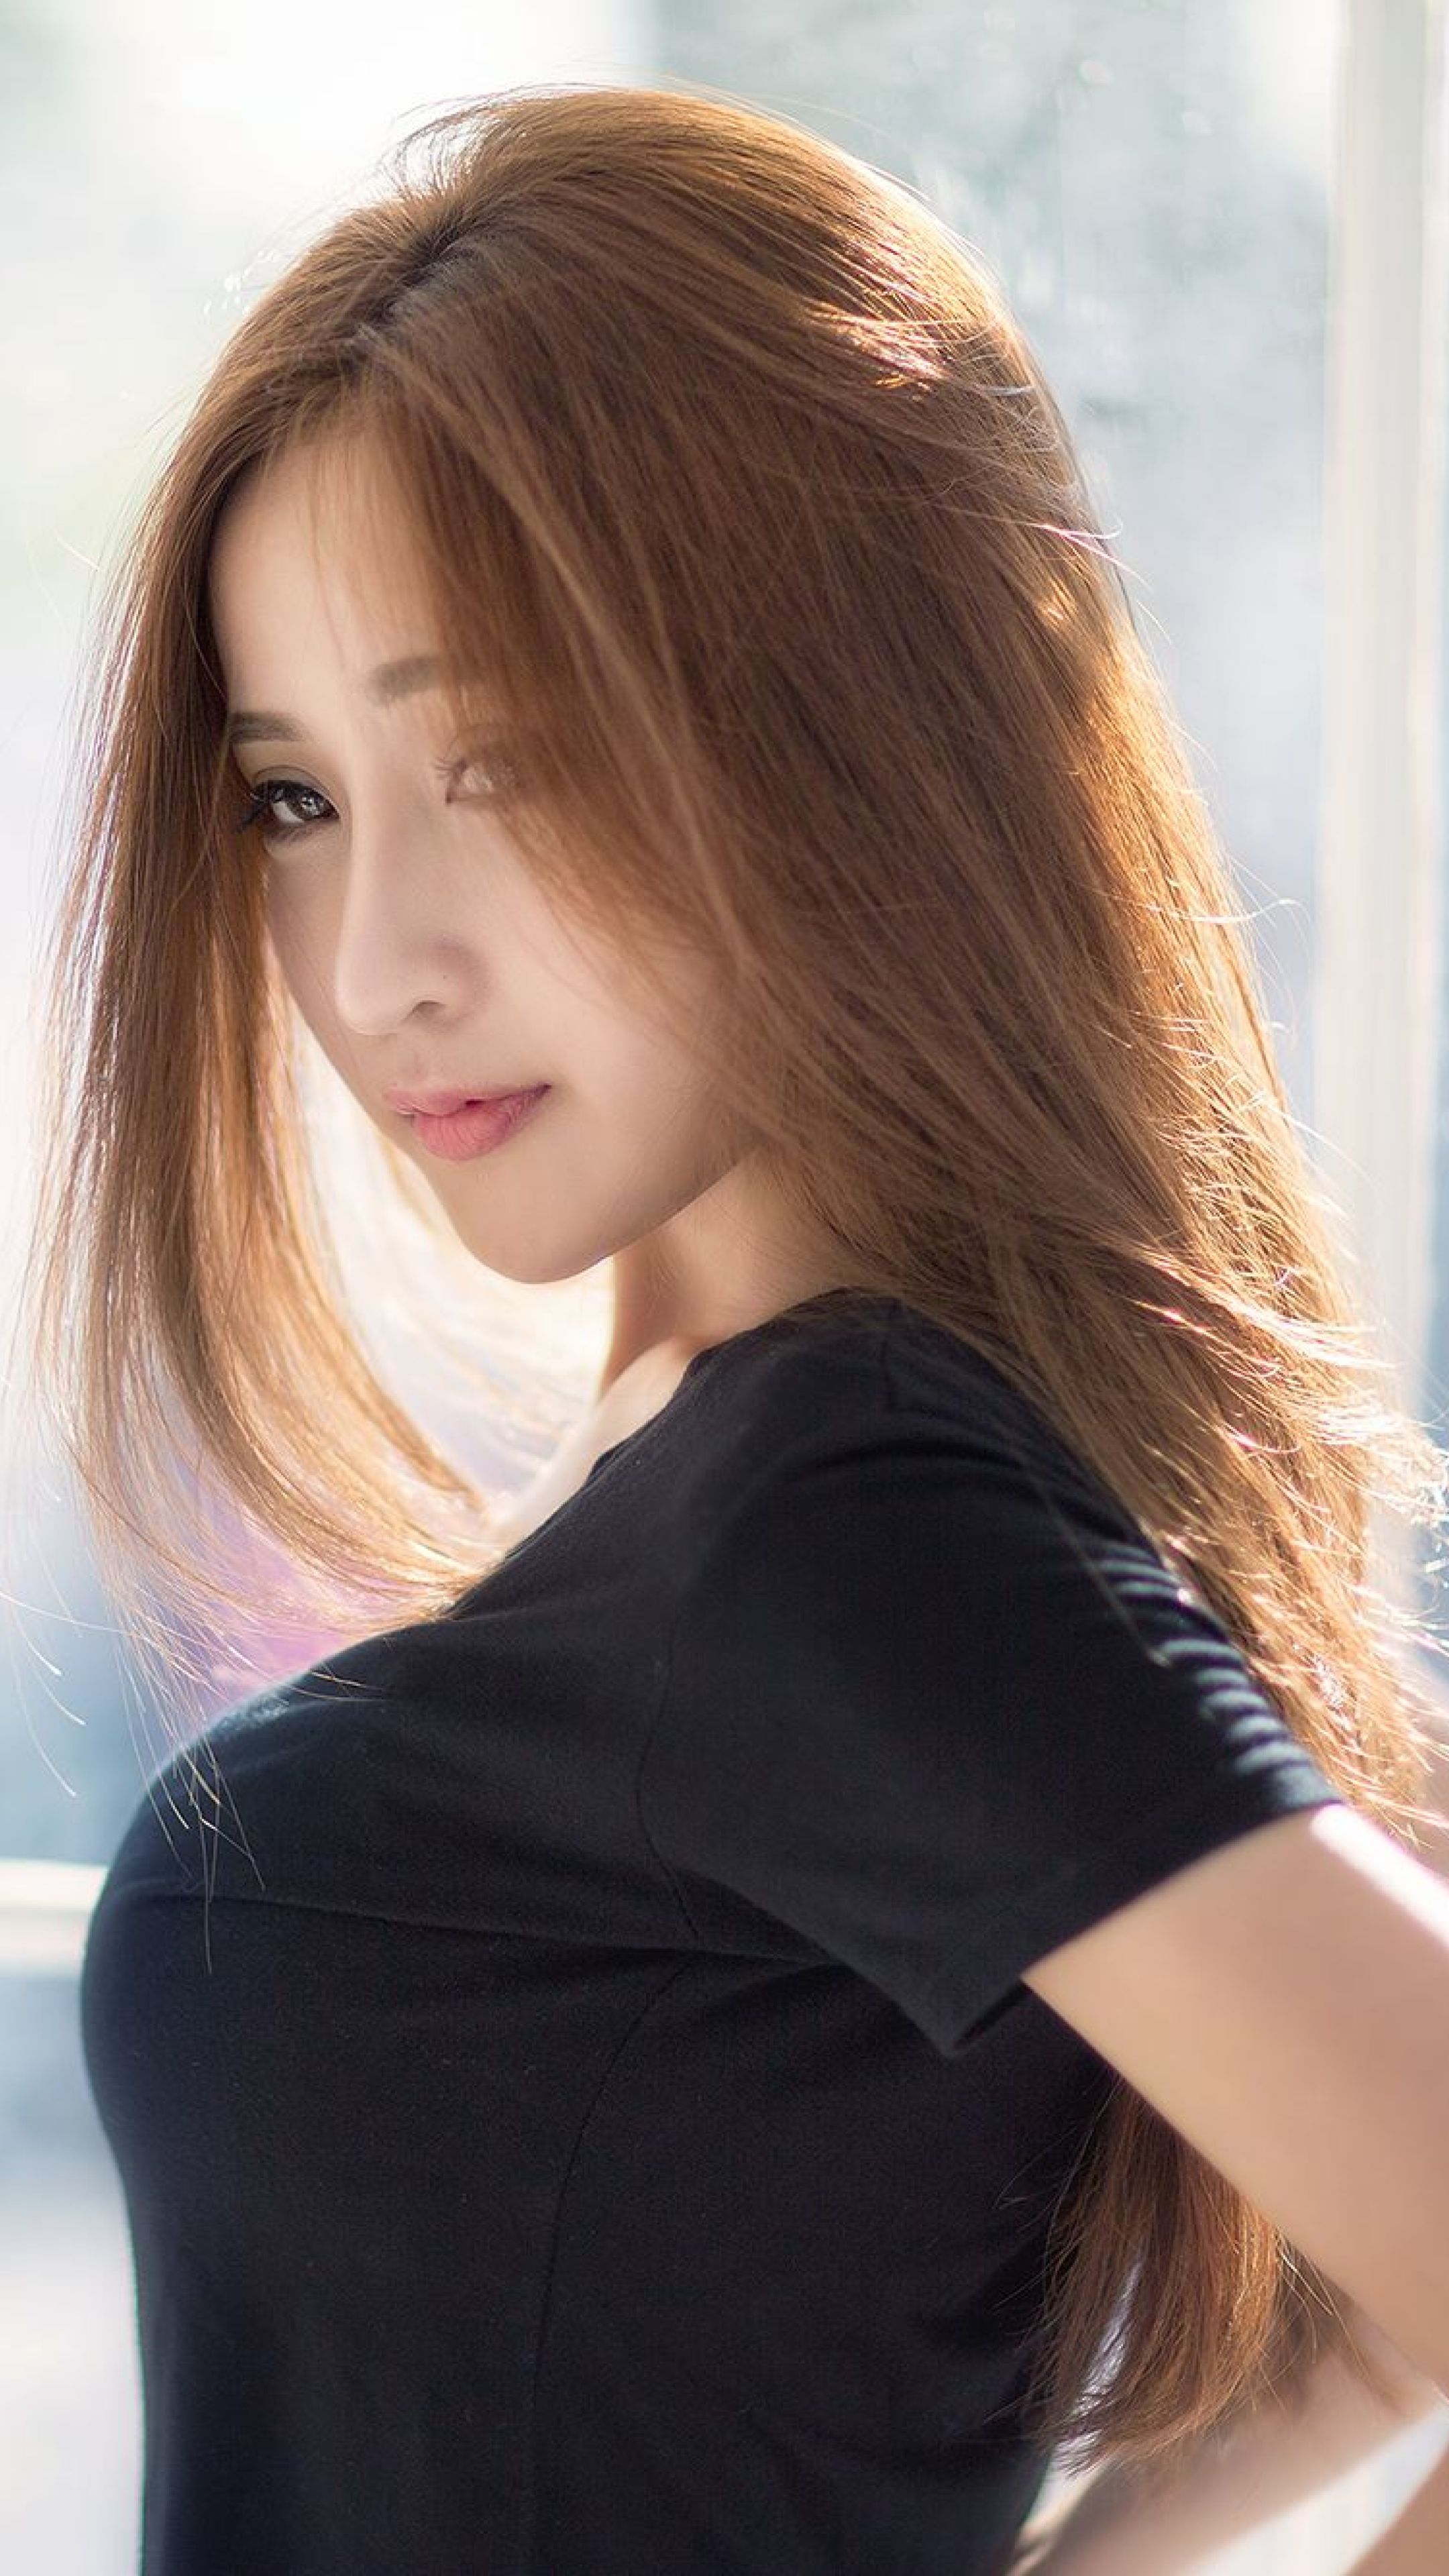 Asian Hot Girl Sony Xperia X, XZ, Z5 Premium Wallpaper, HD Girls 4K Wallpaper, Image, Photo and Background